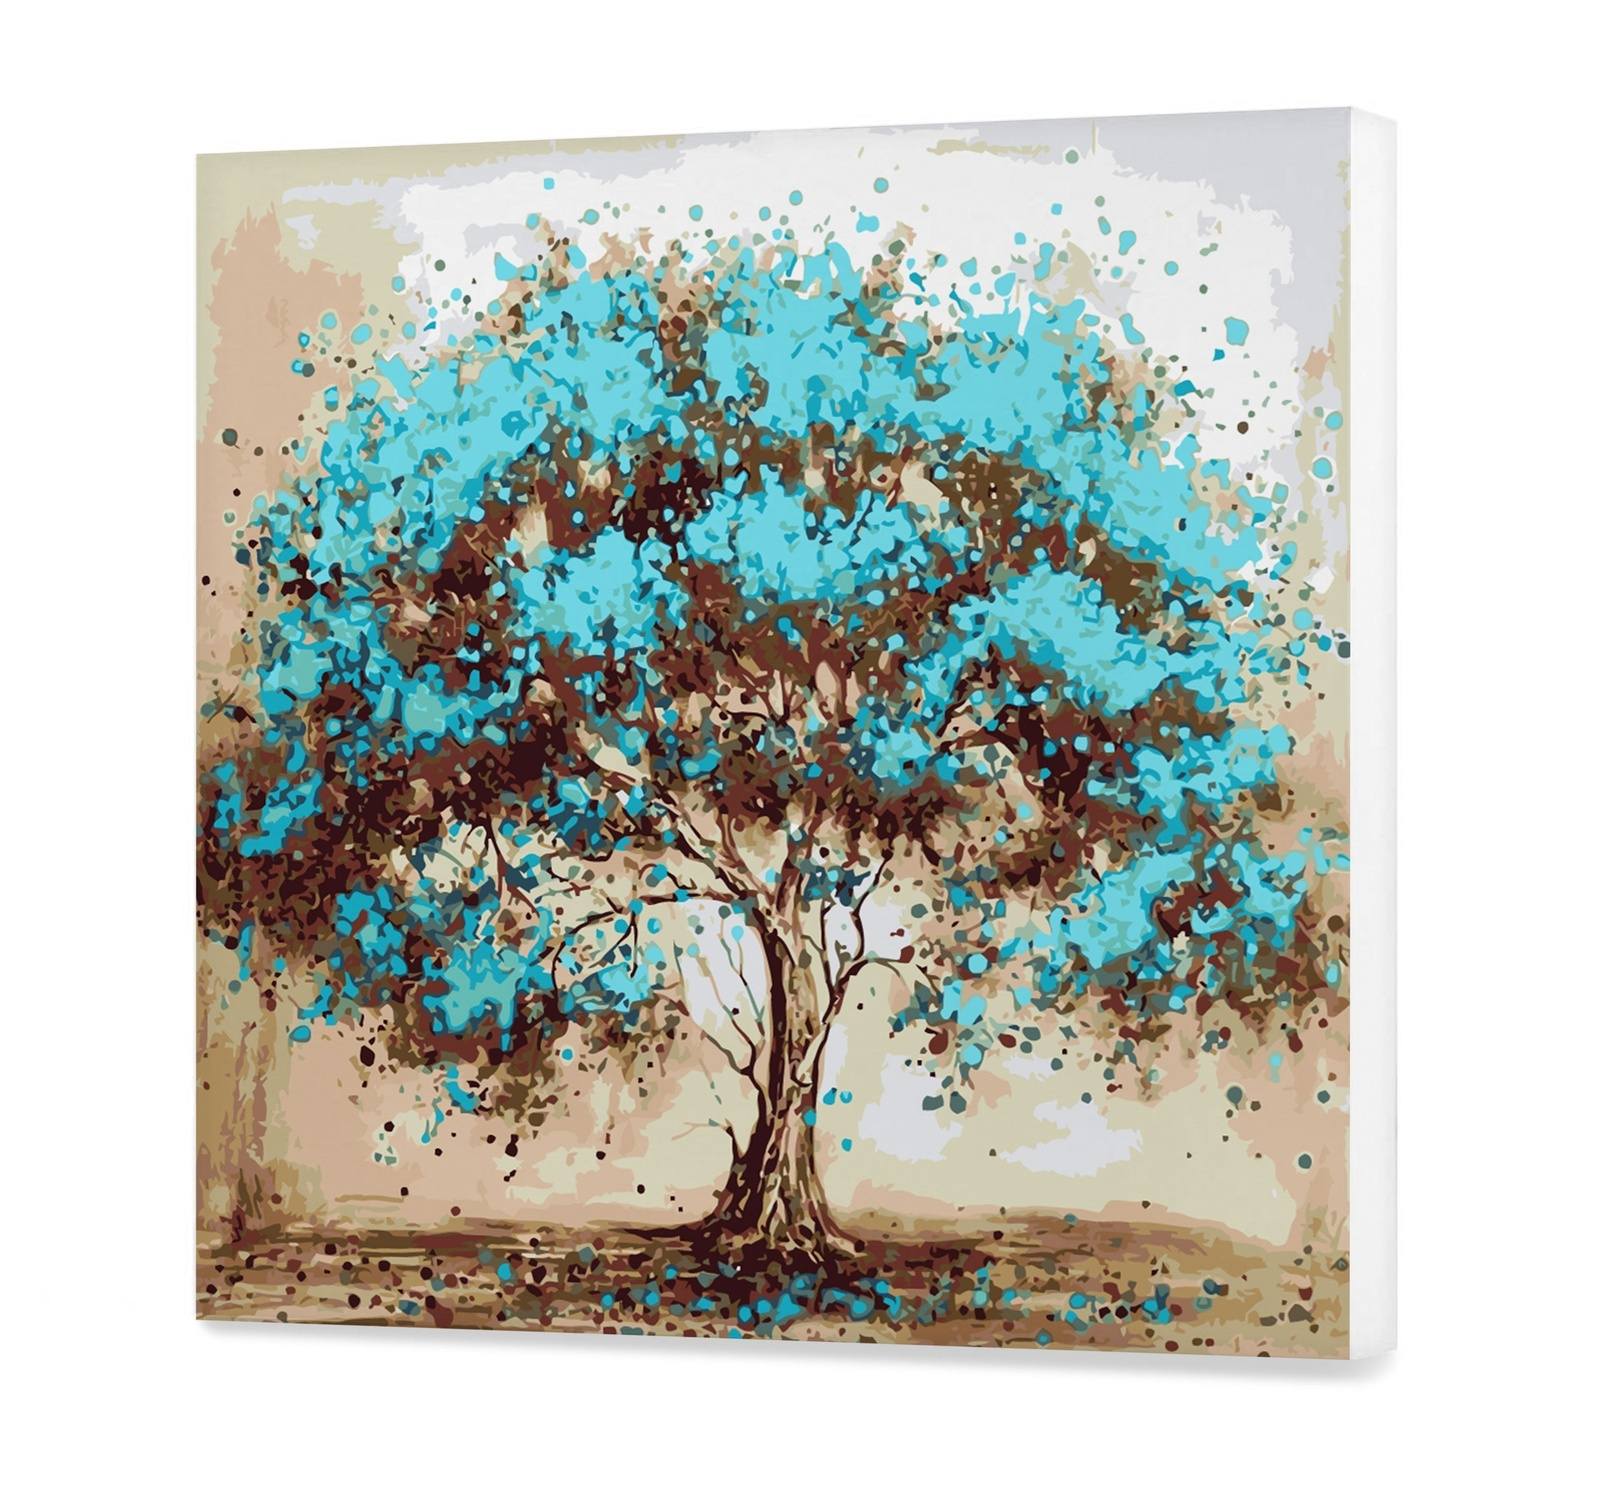 Mėlynasis Medis (Cdc0178)